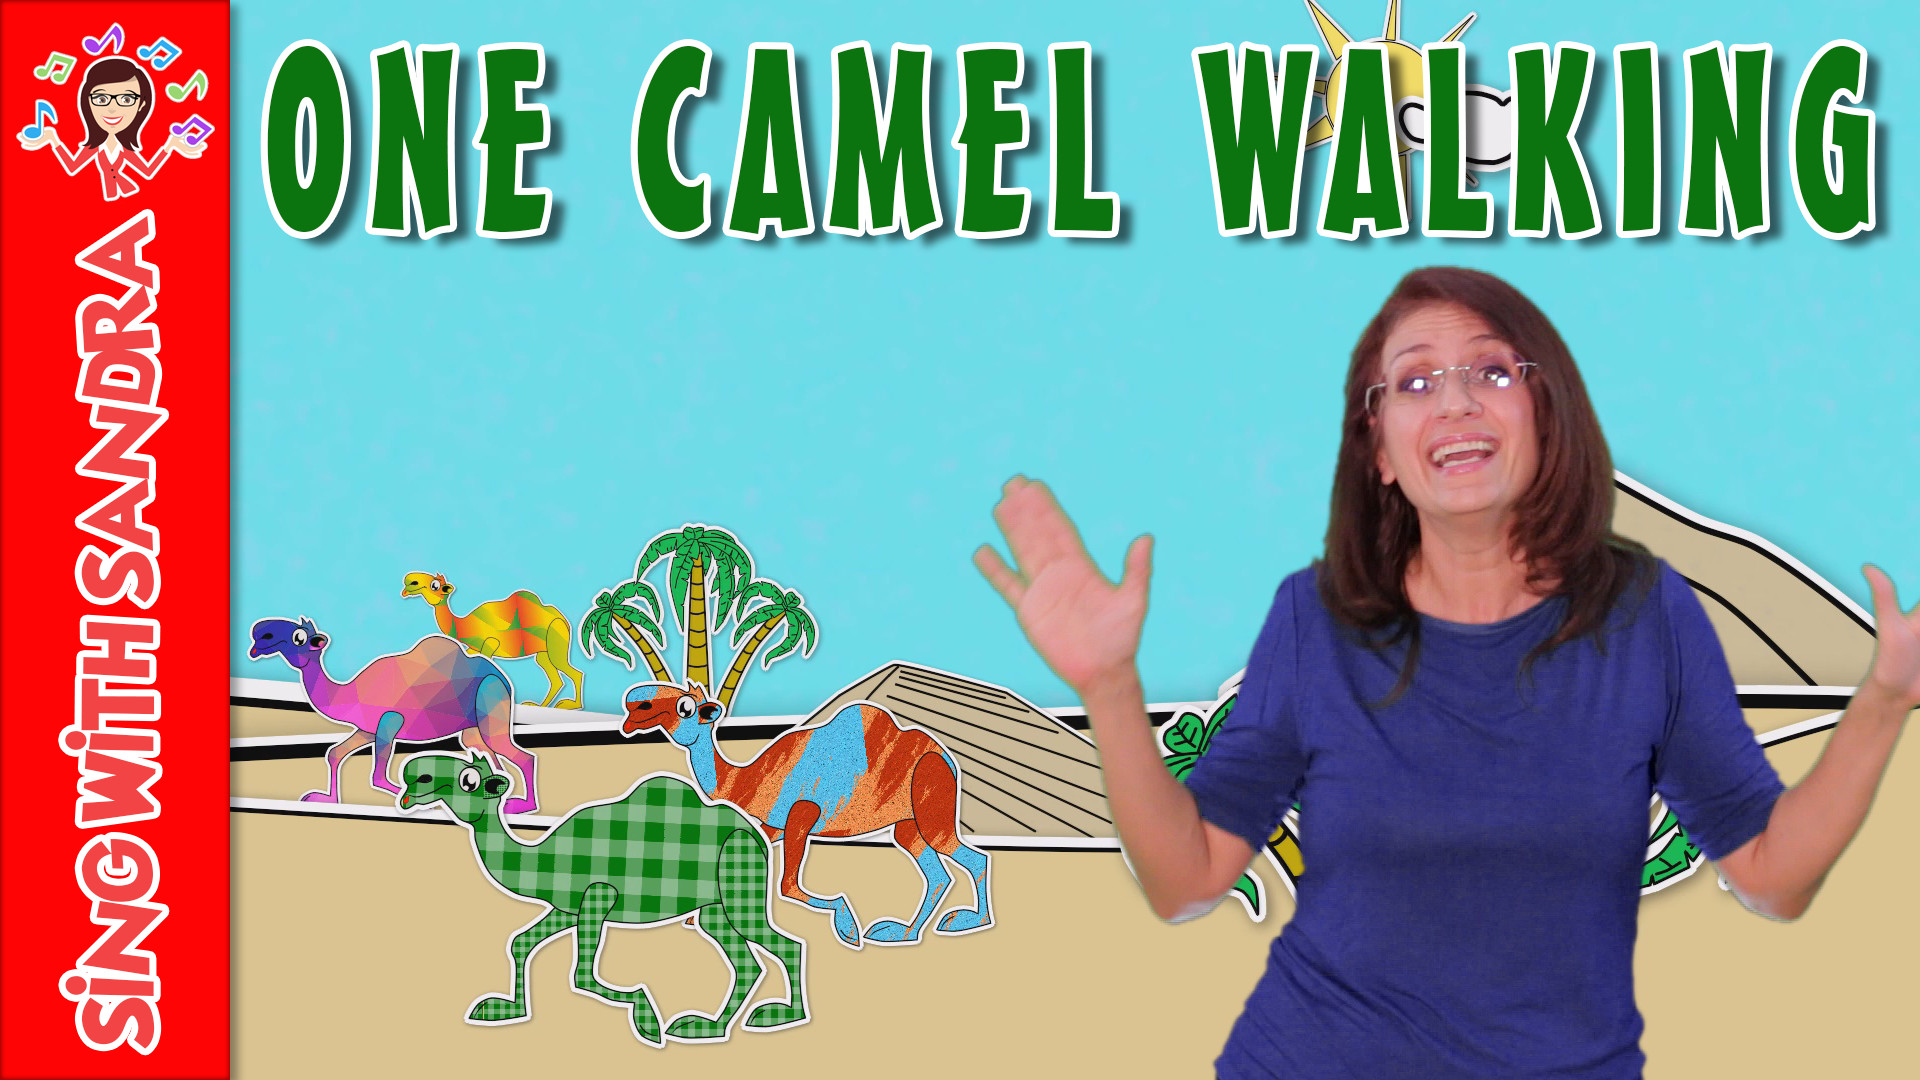 One Camel Walking